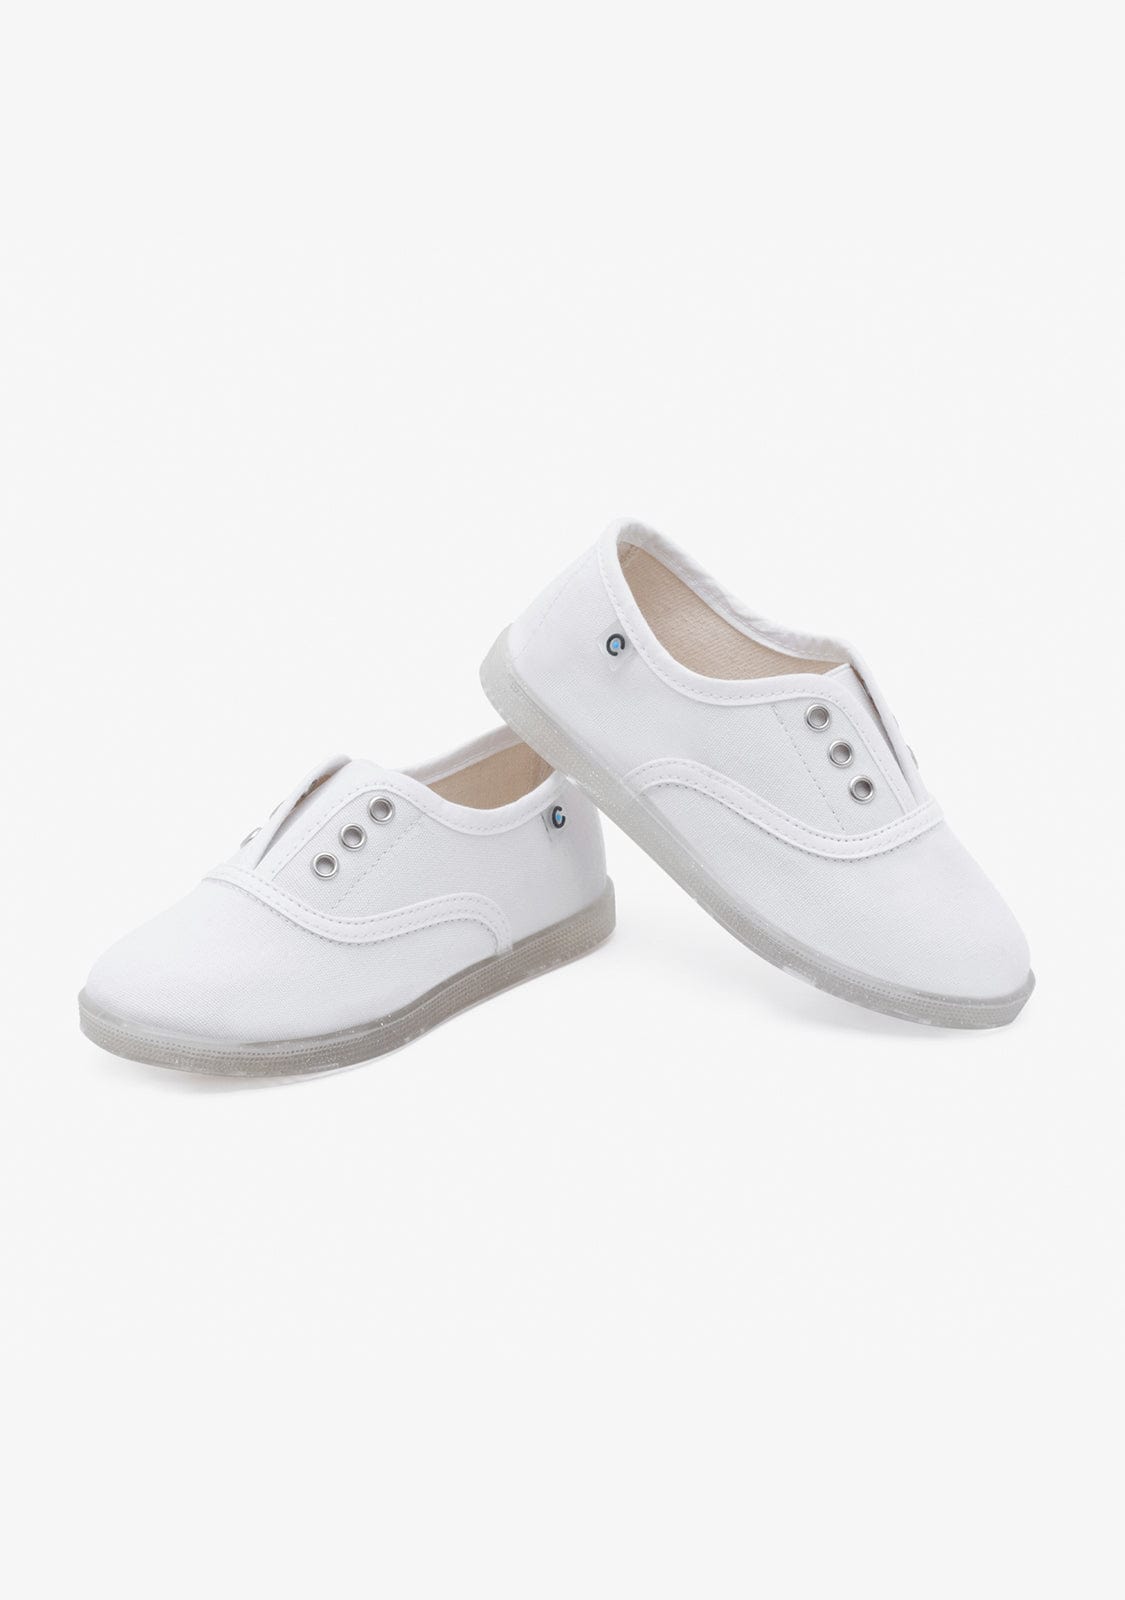 CONGUITOS Shoes Ecologic White Plimsolls